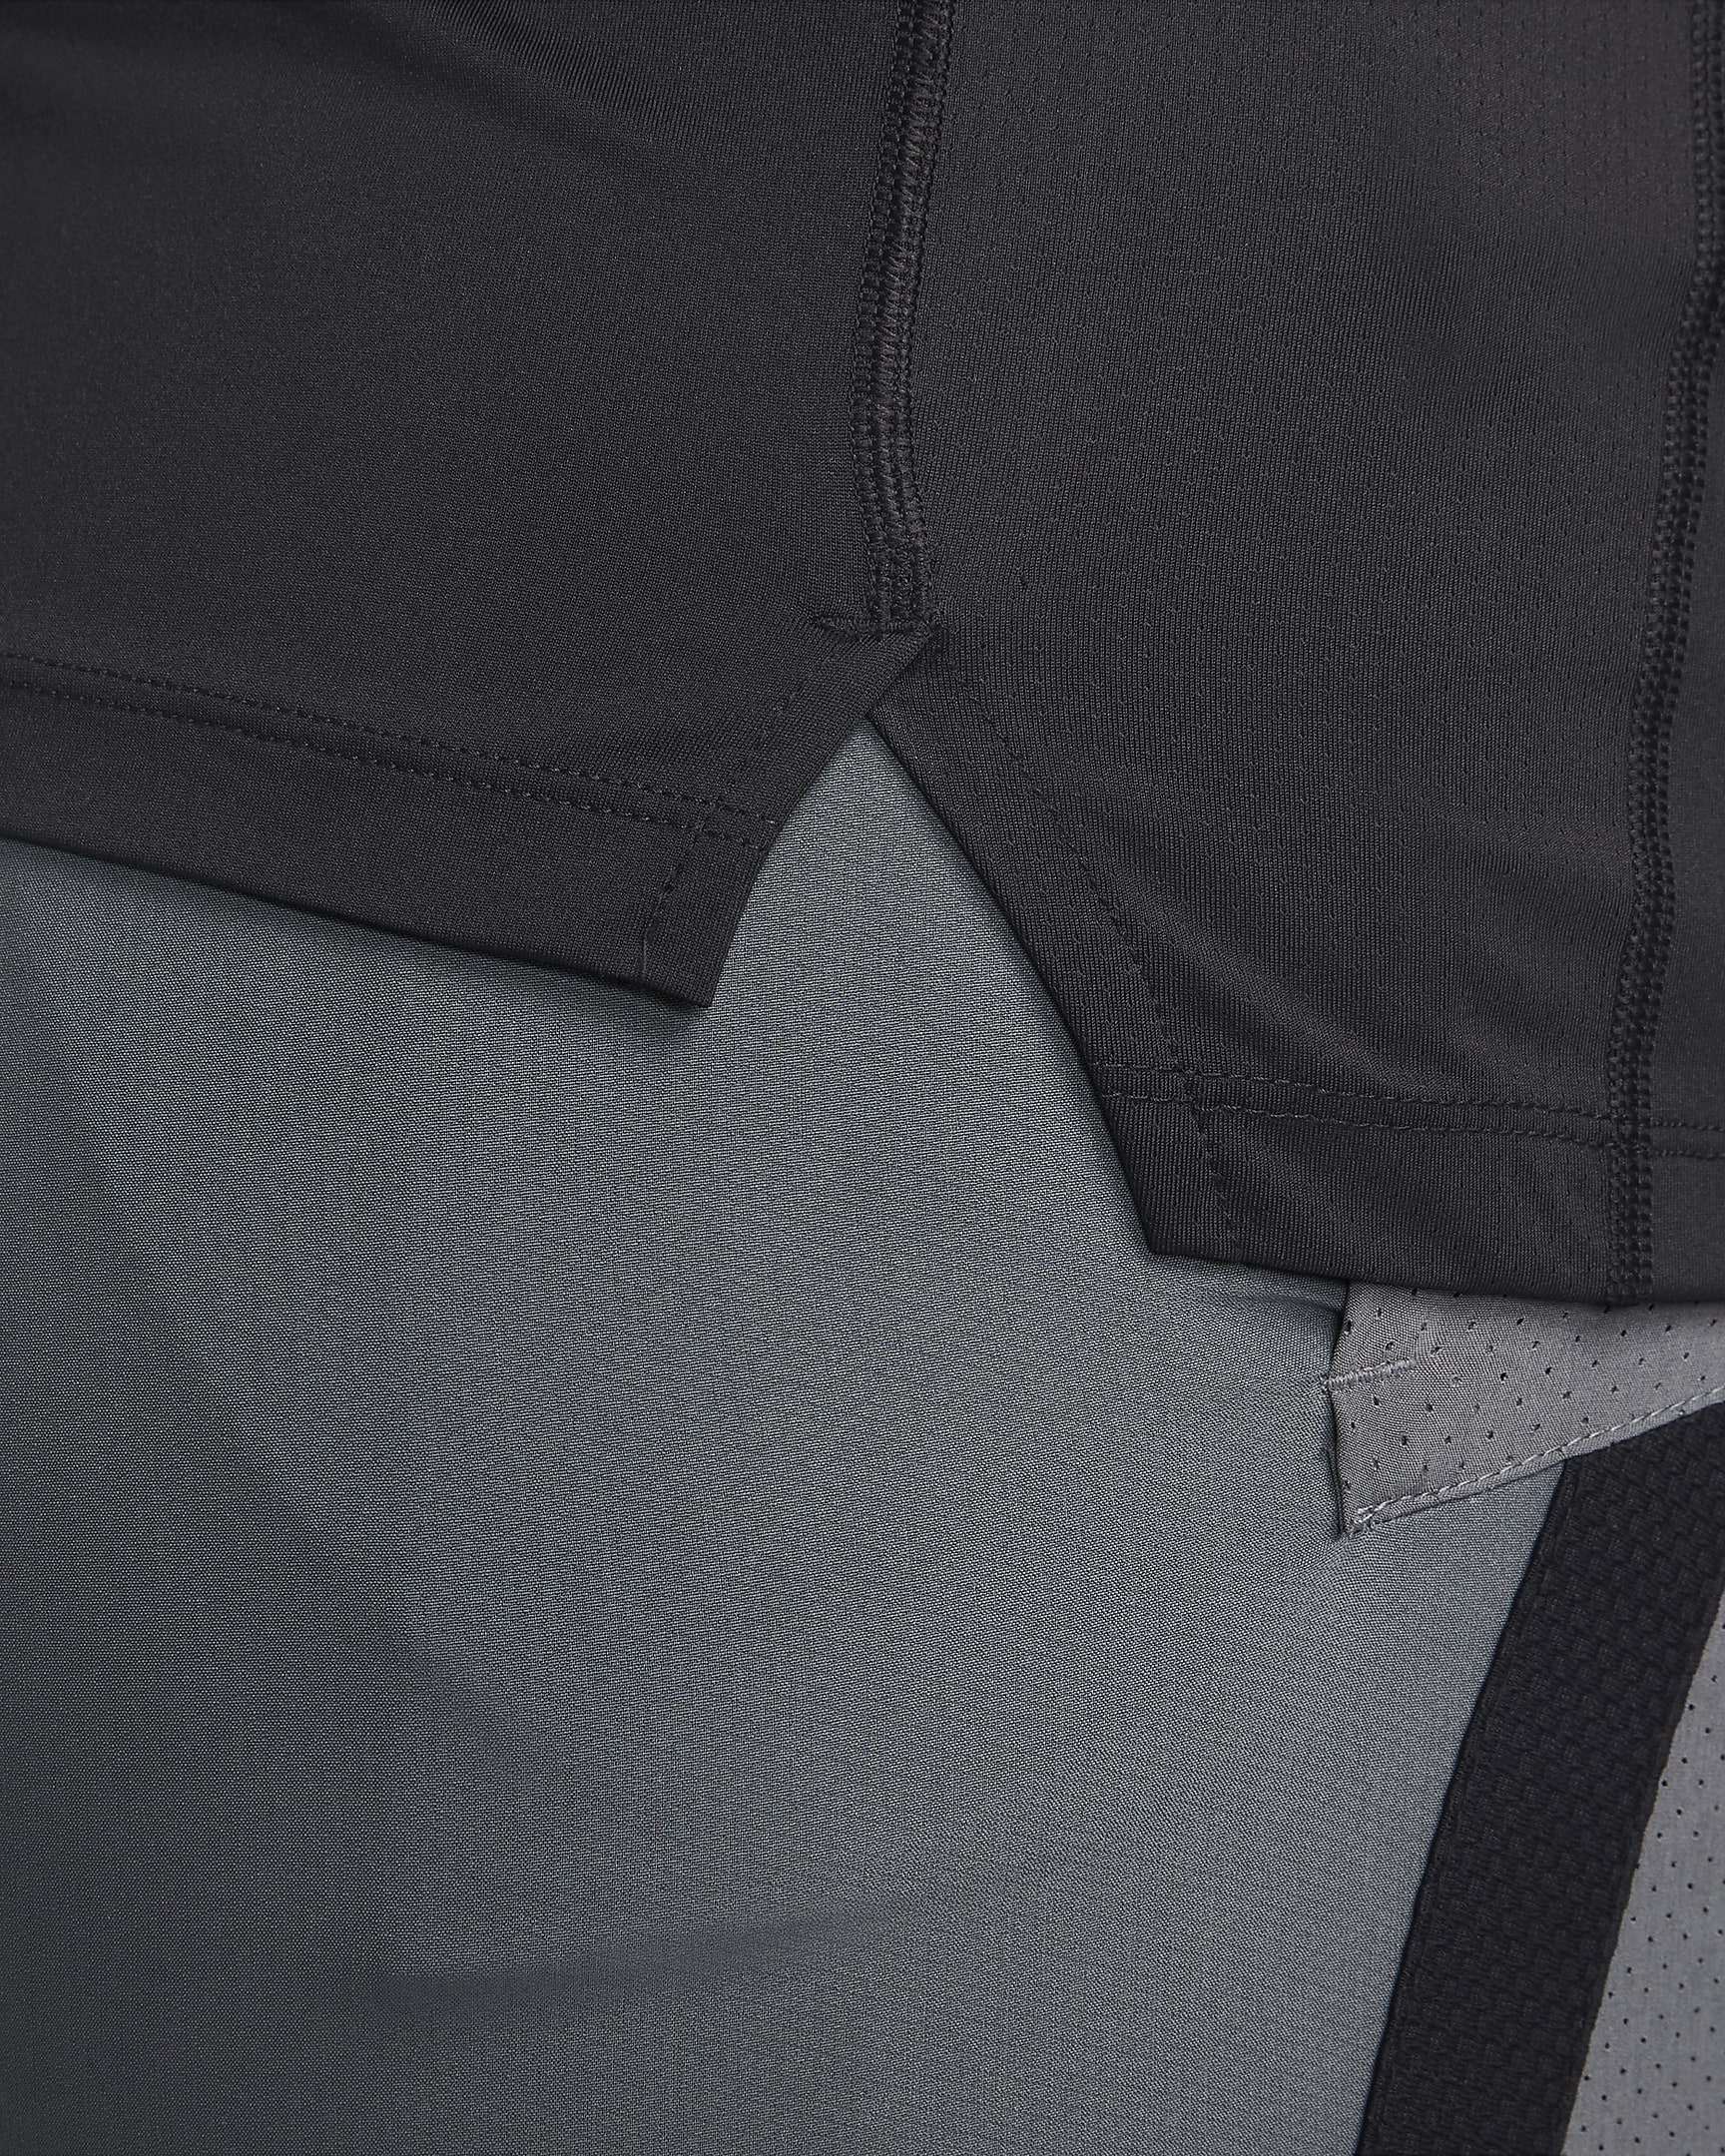 Camiseta sinmangas y ajuste slim para hombre Nike Pro Dri-FIT. Nike.com